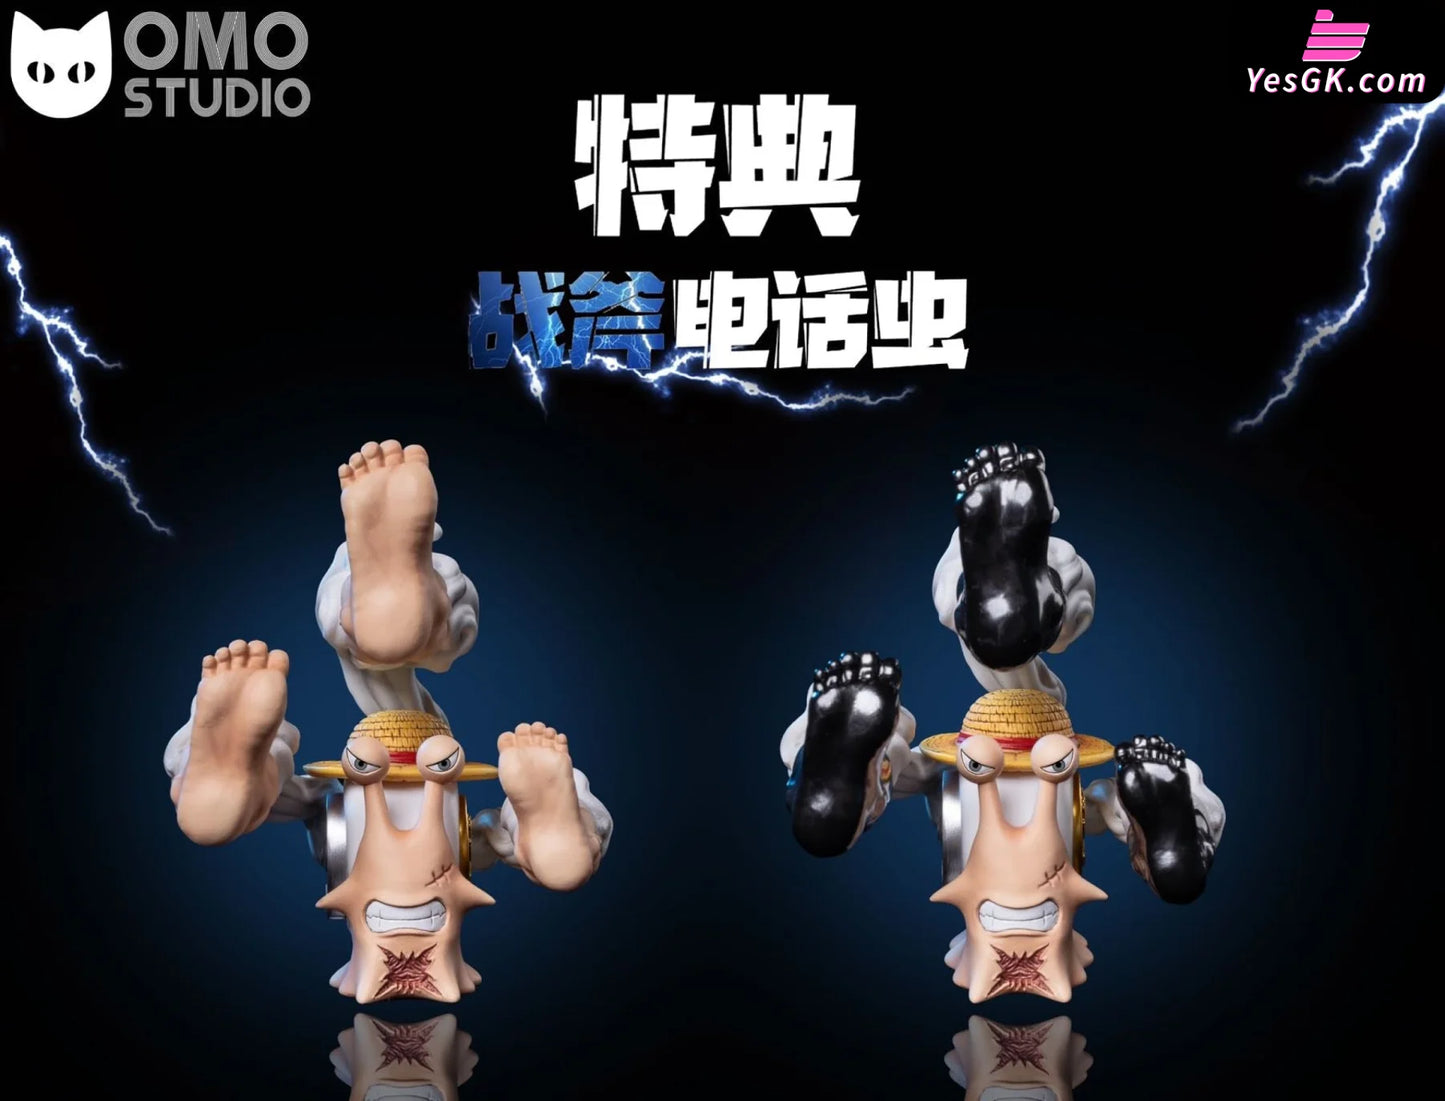 One Piece Wcf Max Tomahawk Monkey D. Luffy Resin Statue - Omo Studio [Pre-Order]